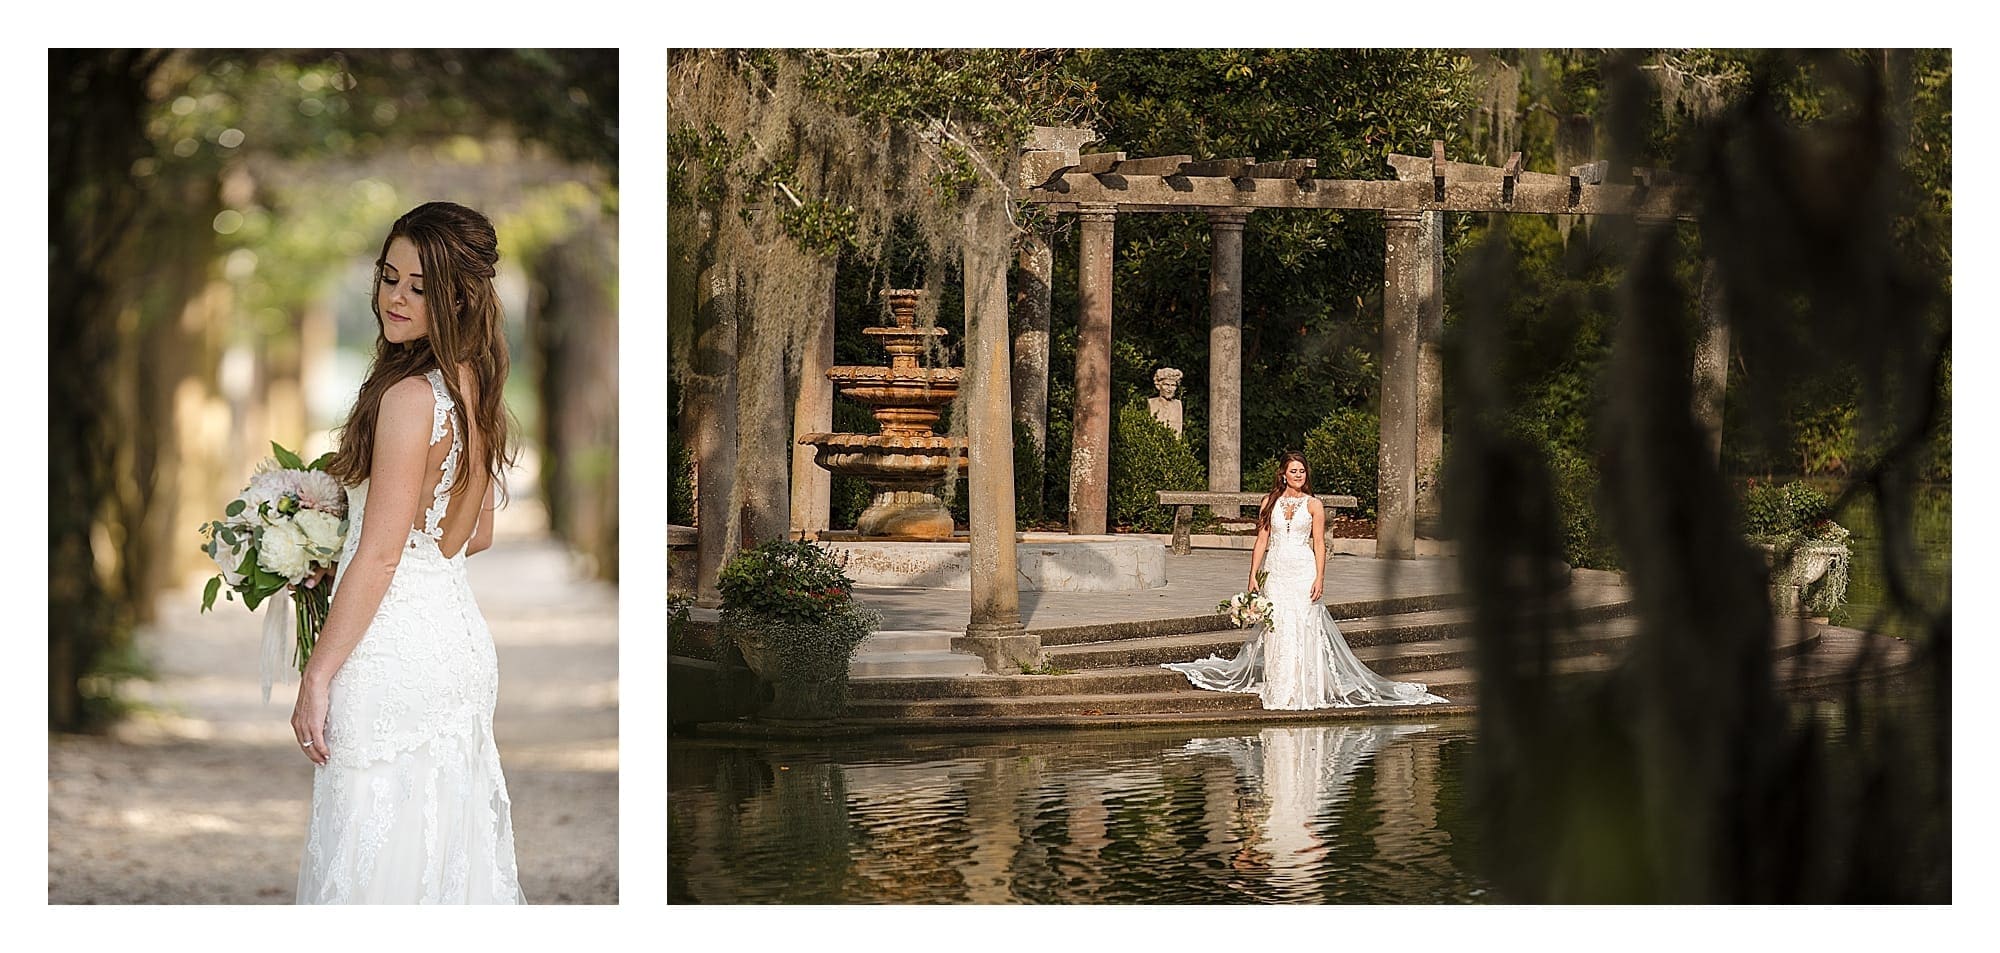 Bride standing on garden steps beside water fountain